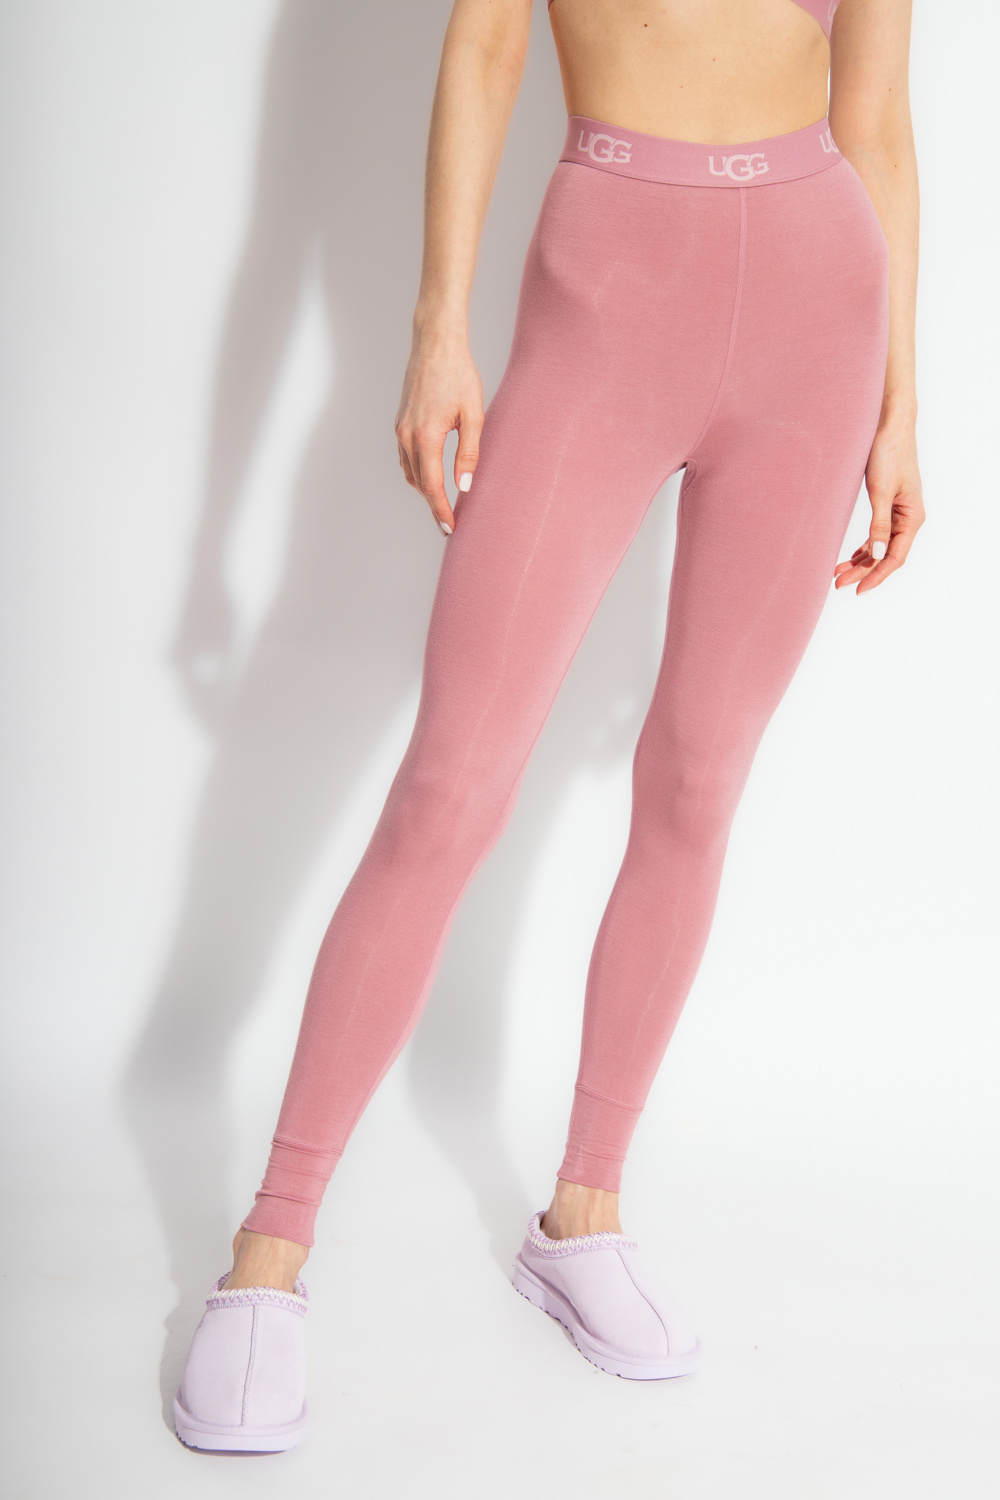 UGG Mckena Logo Leggings (Flamingo Pink) Women's Casual Pants - ShopStyle